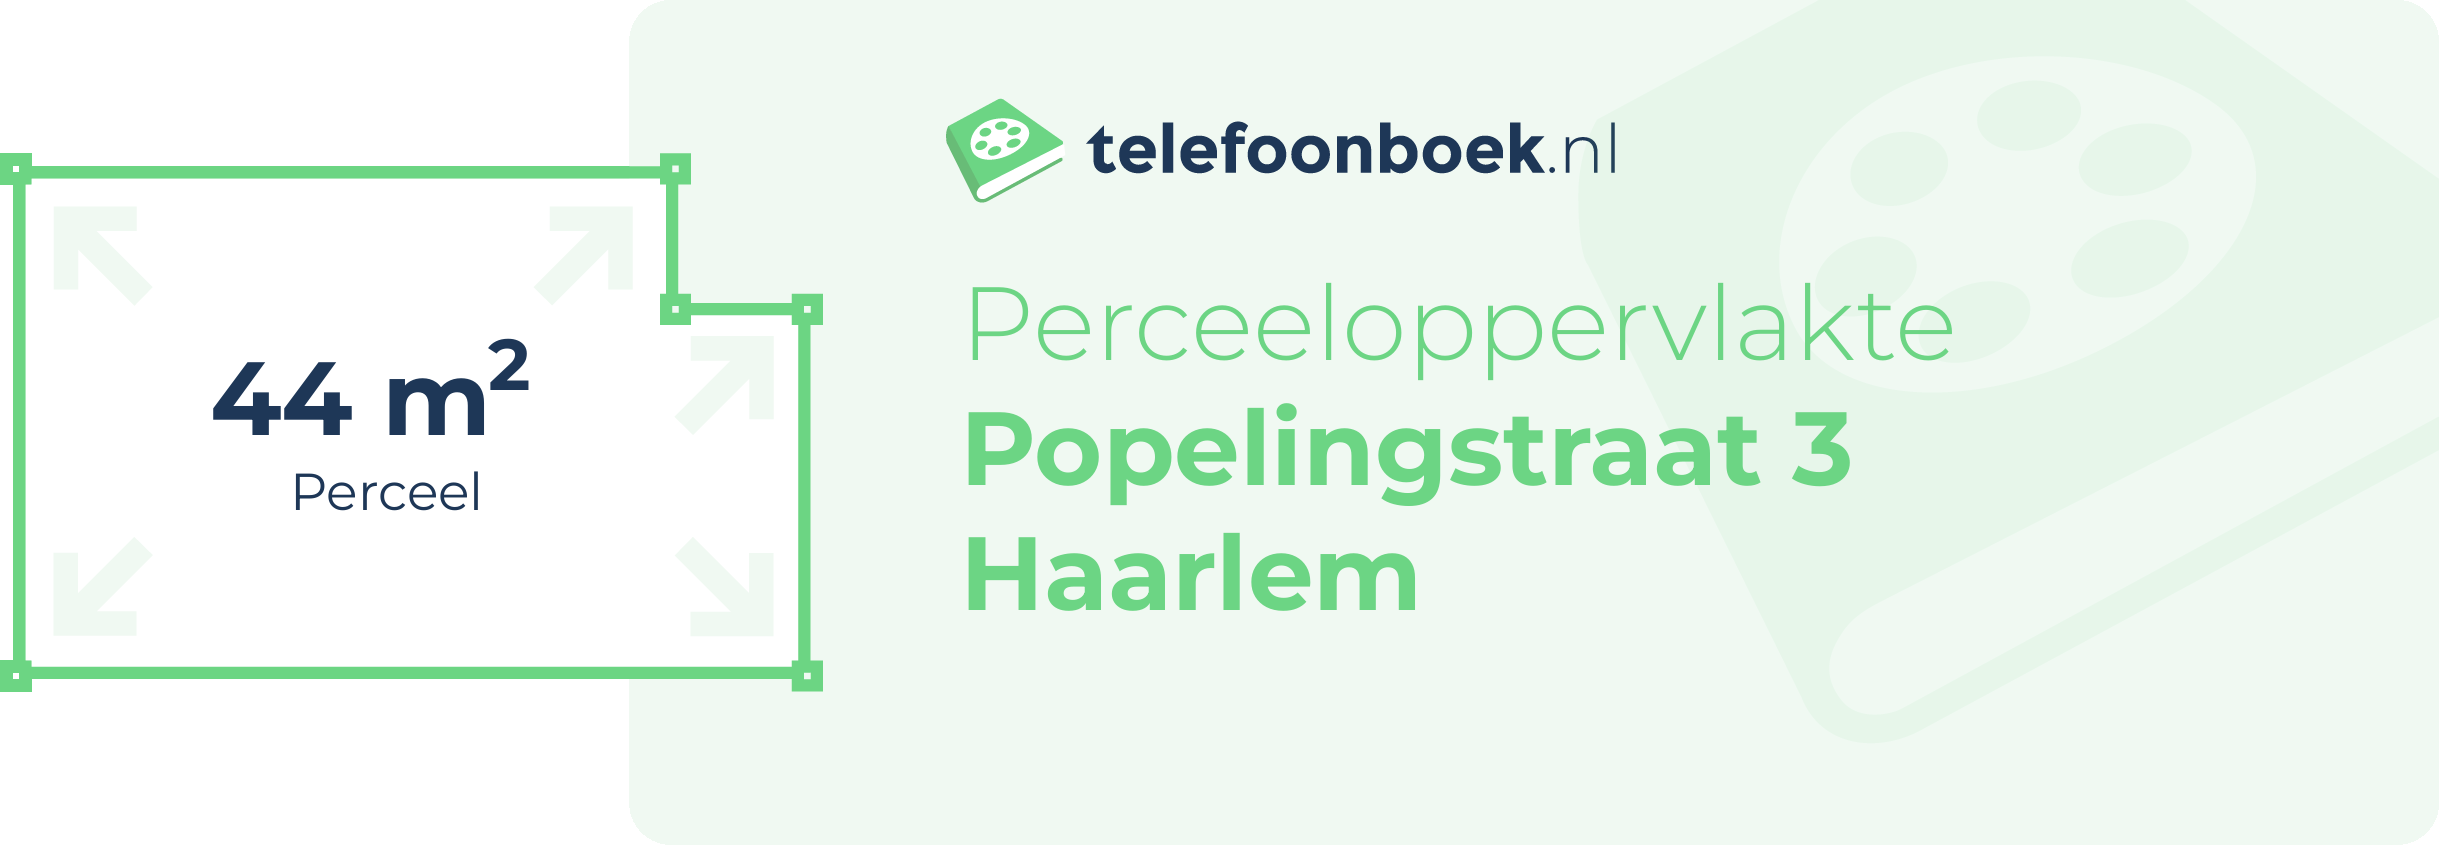 Perceeloppervlakte Popelingstraat 3 Haarlem